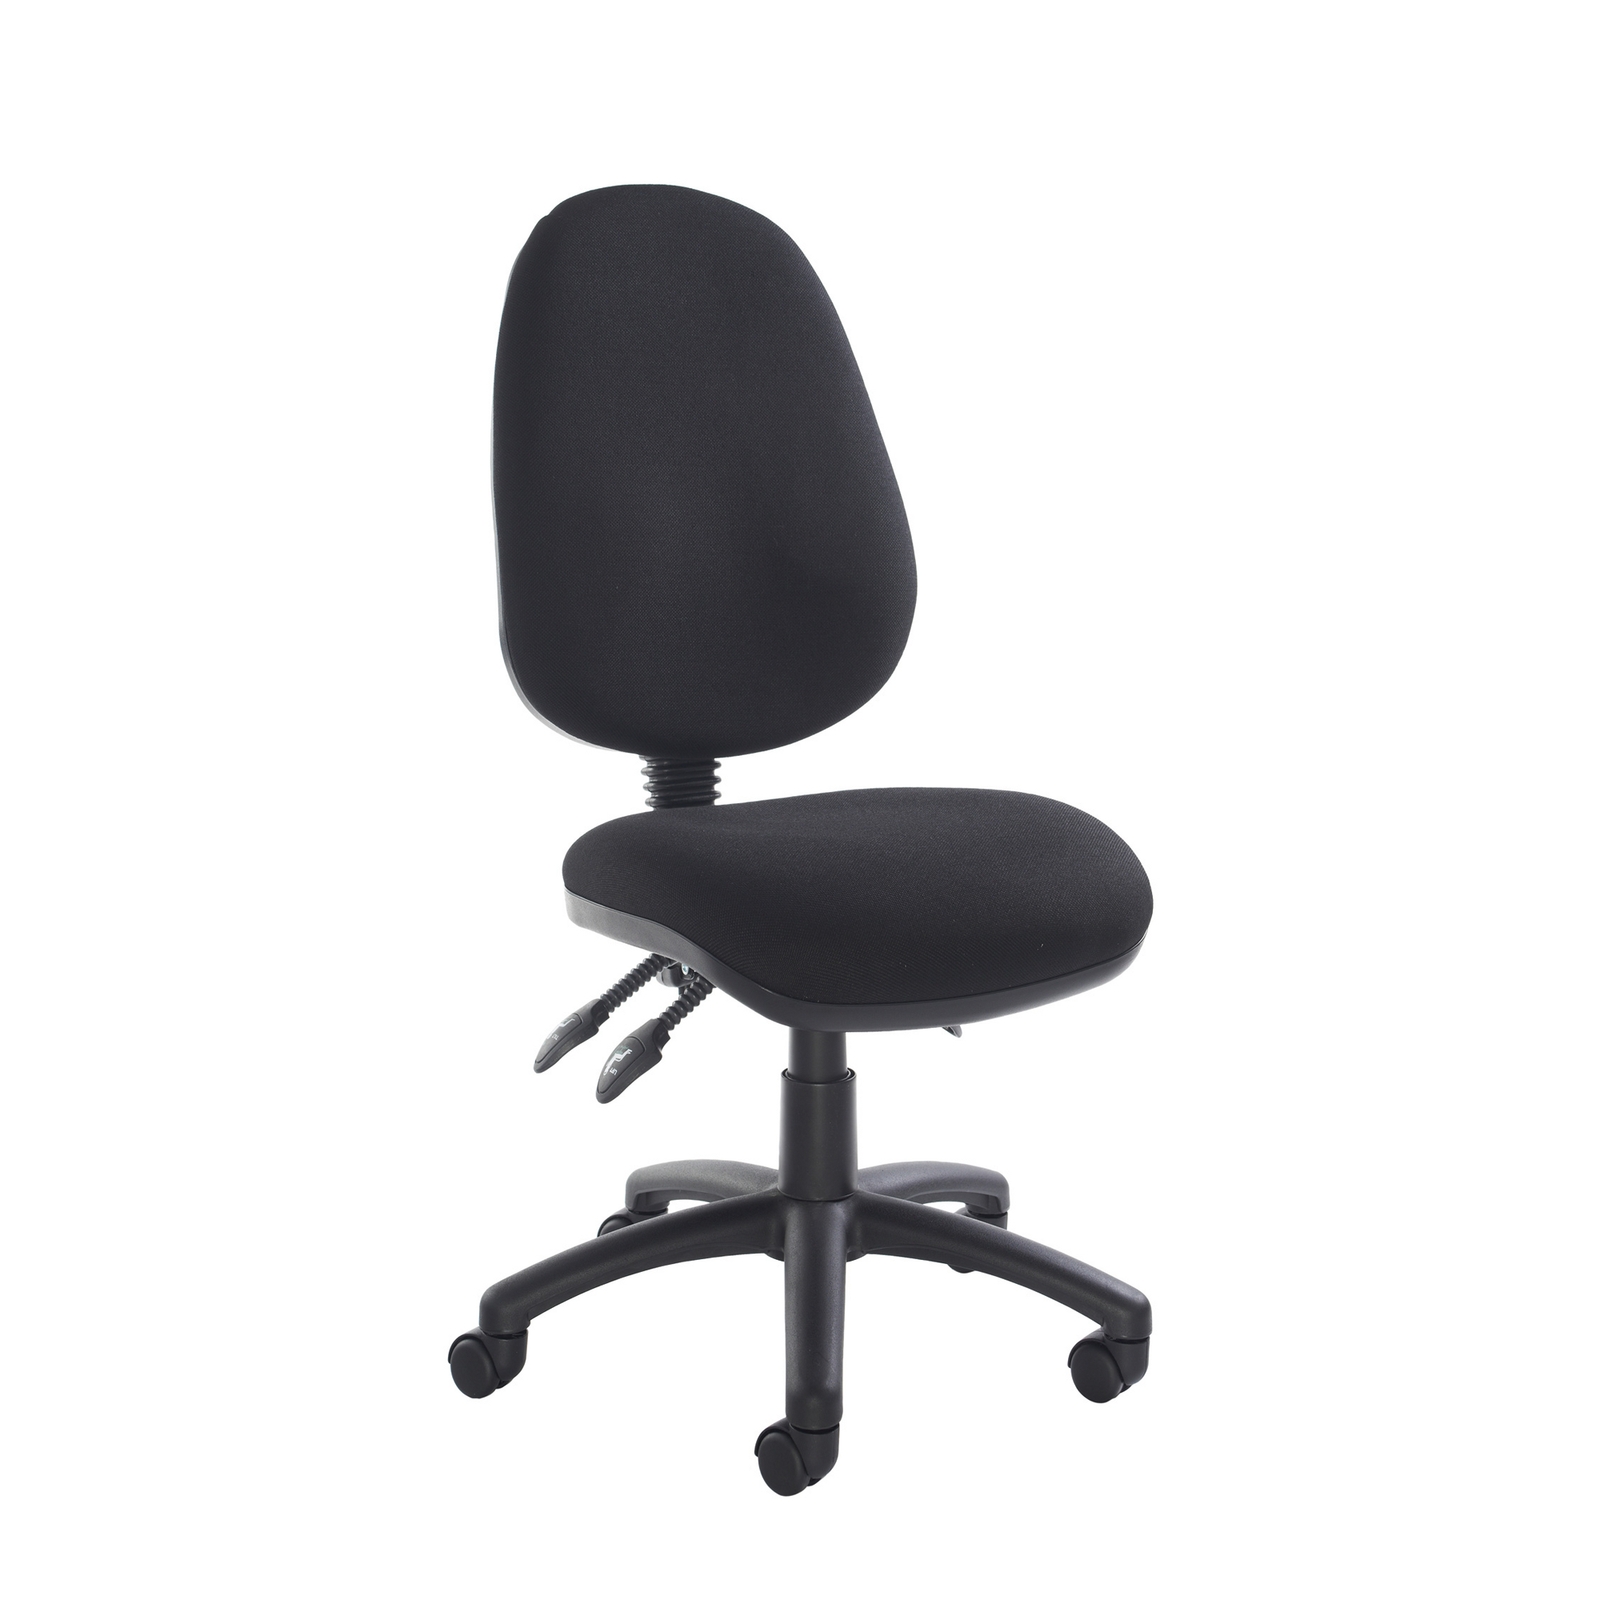 Vantage 3 Lever Chair Black - No Arms